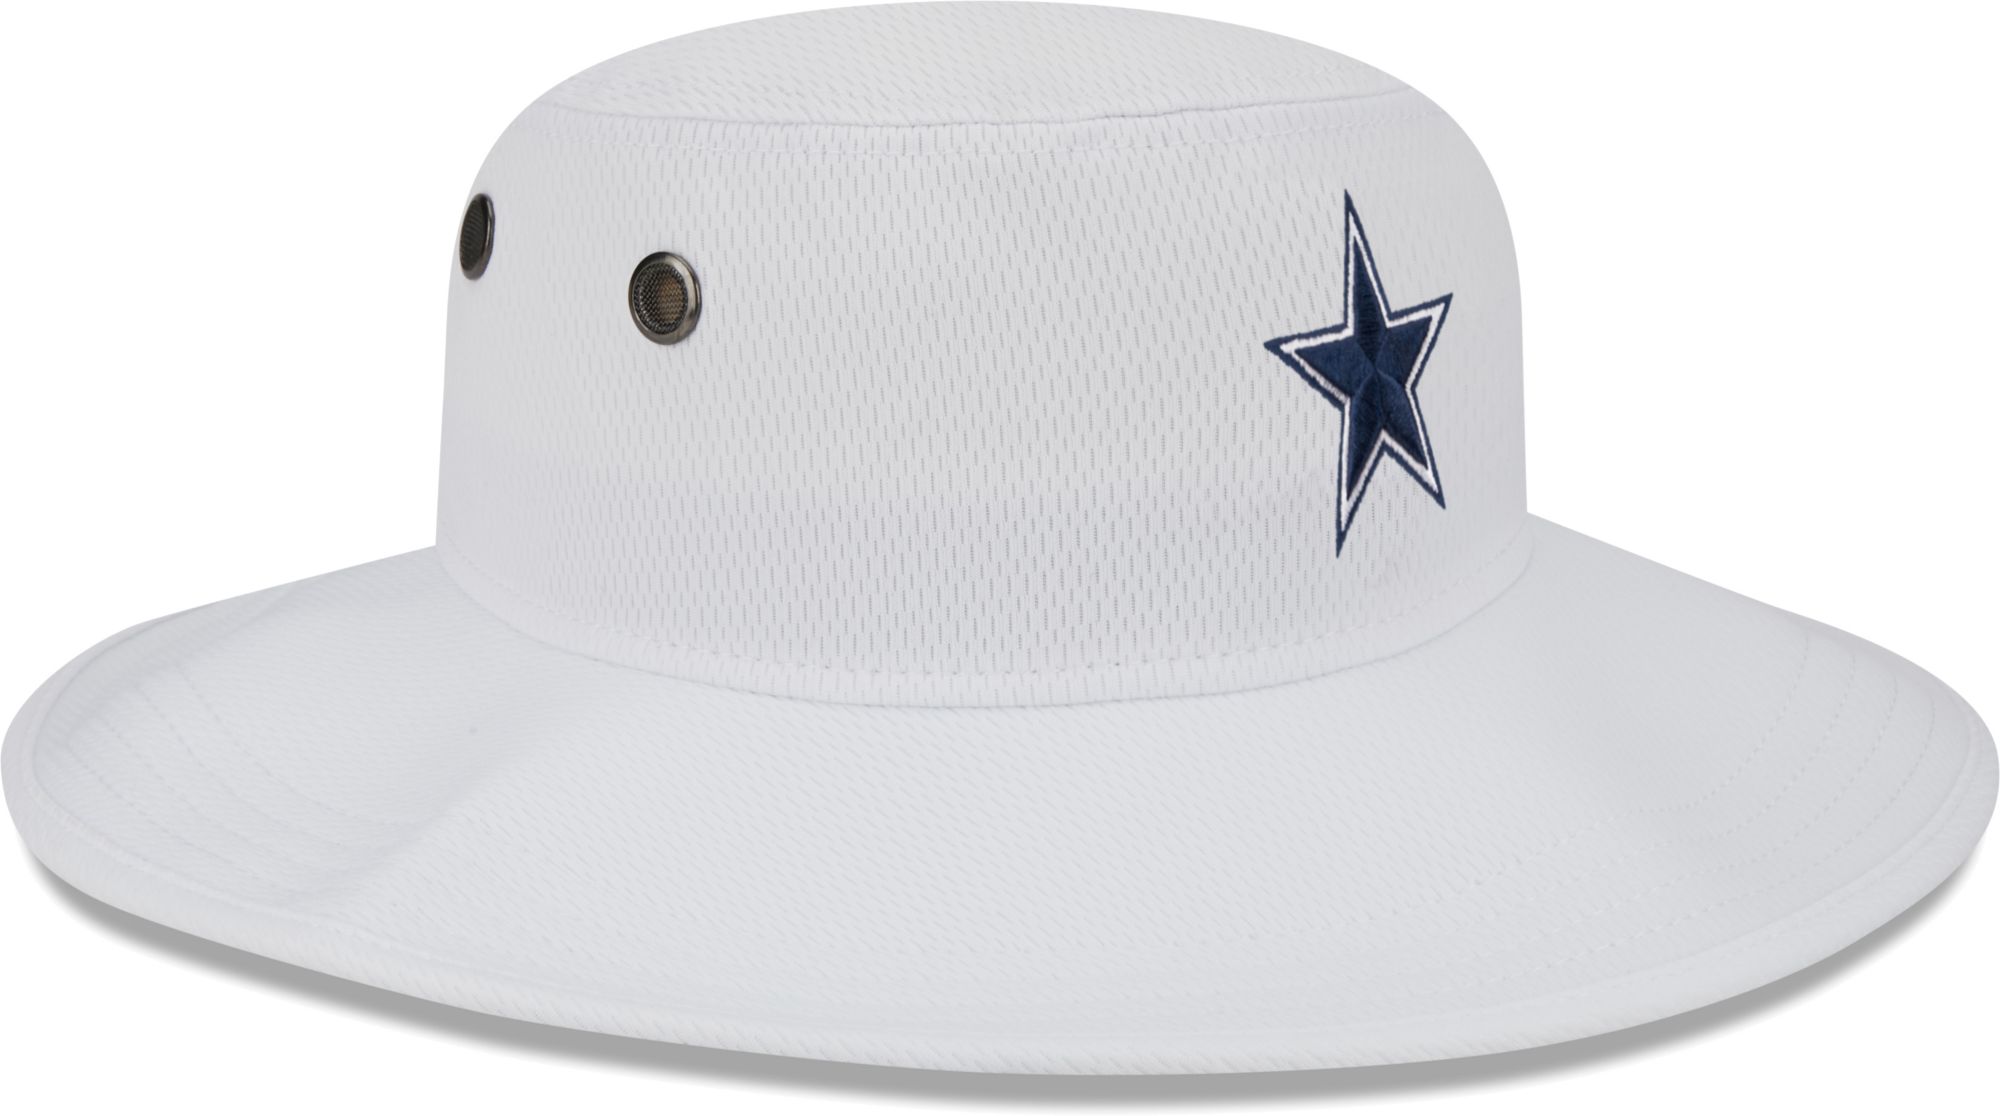 Cowboys training camp adjustable cap